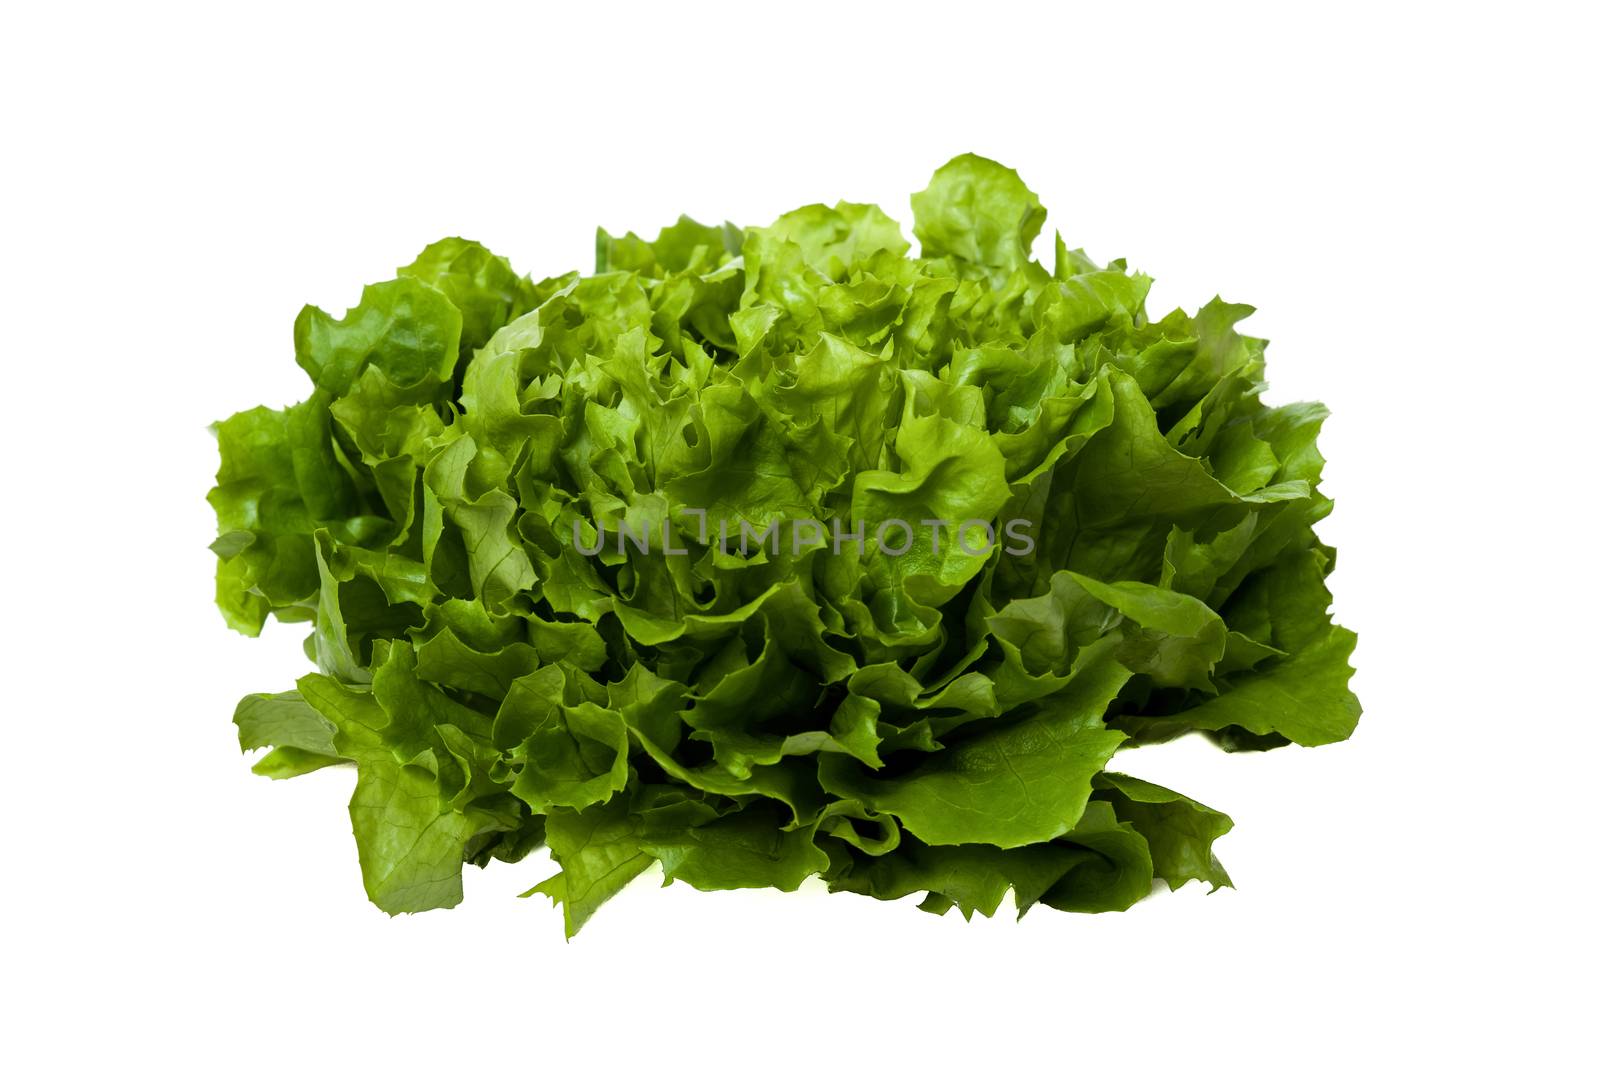 Fresh green lettuce isolated on white background